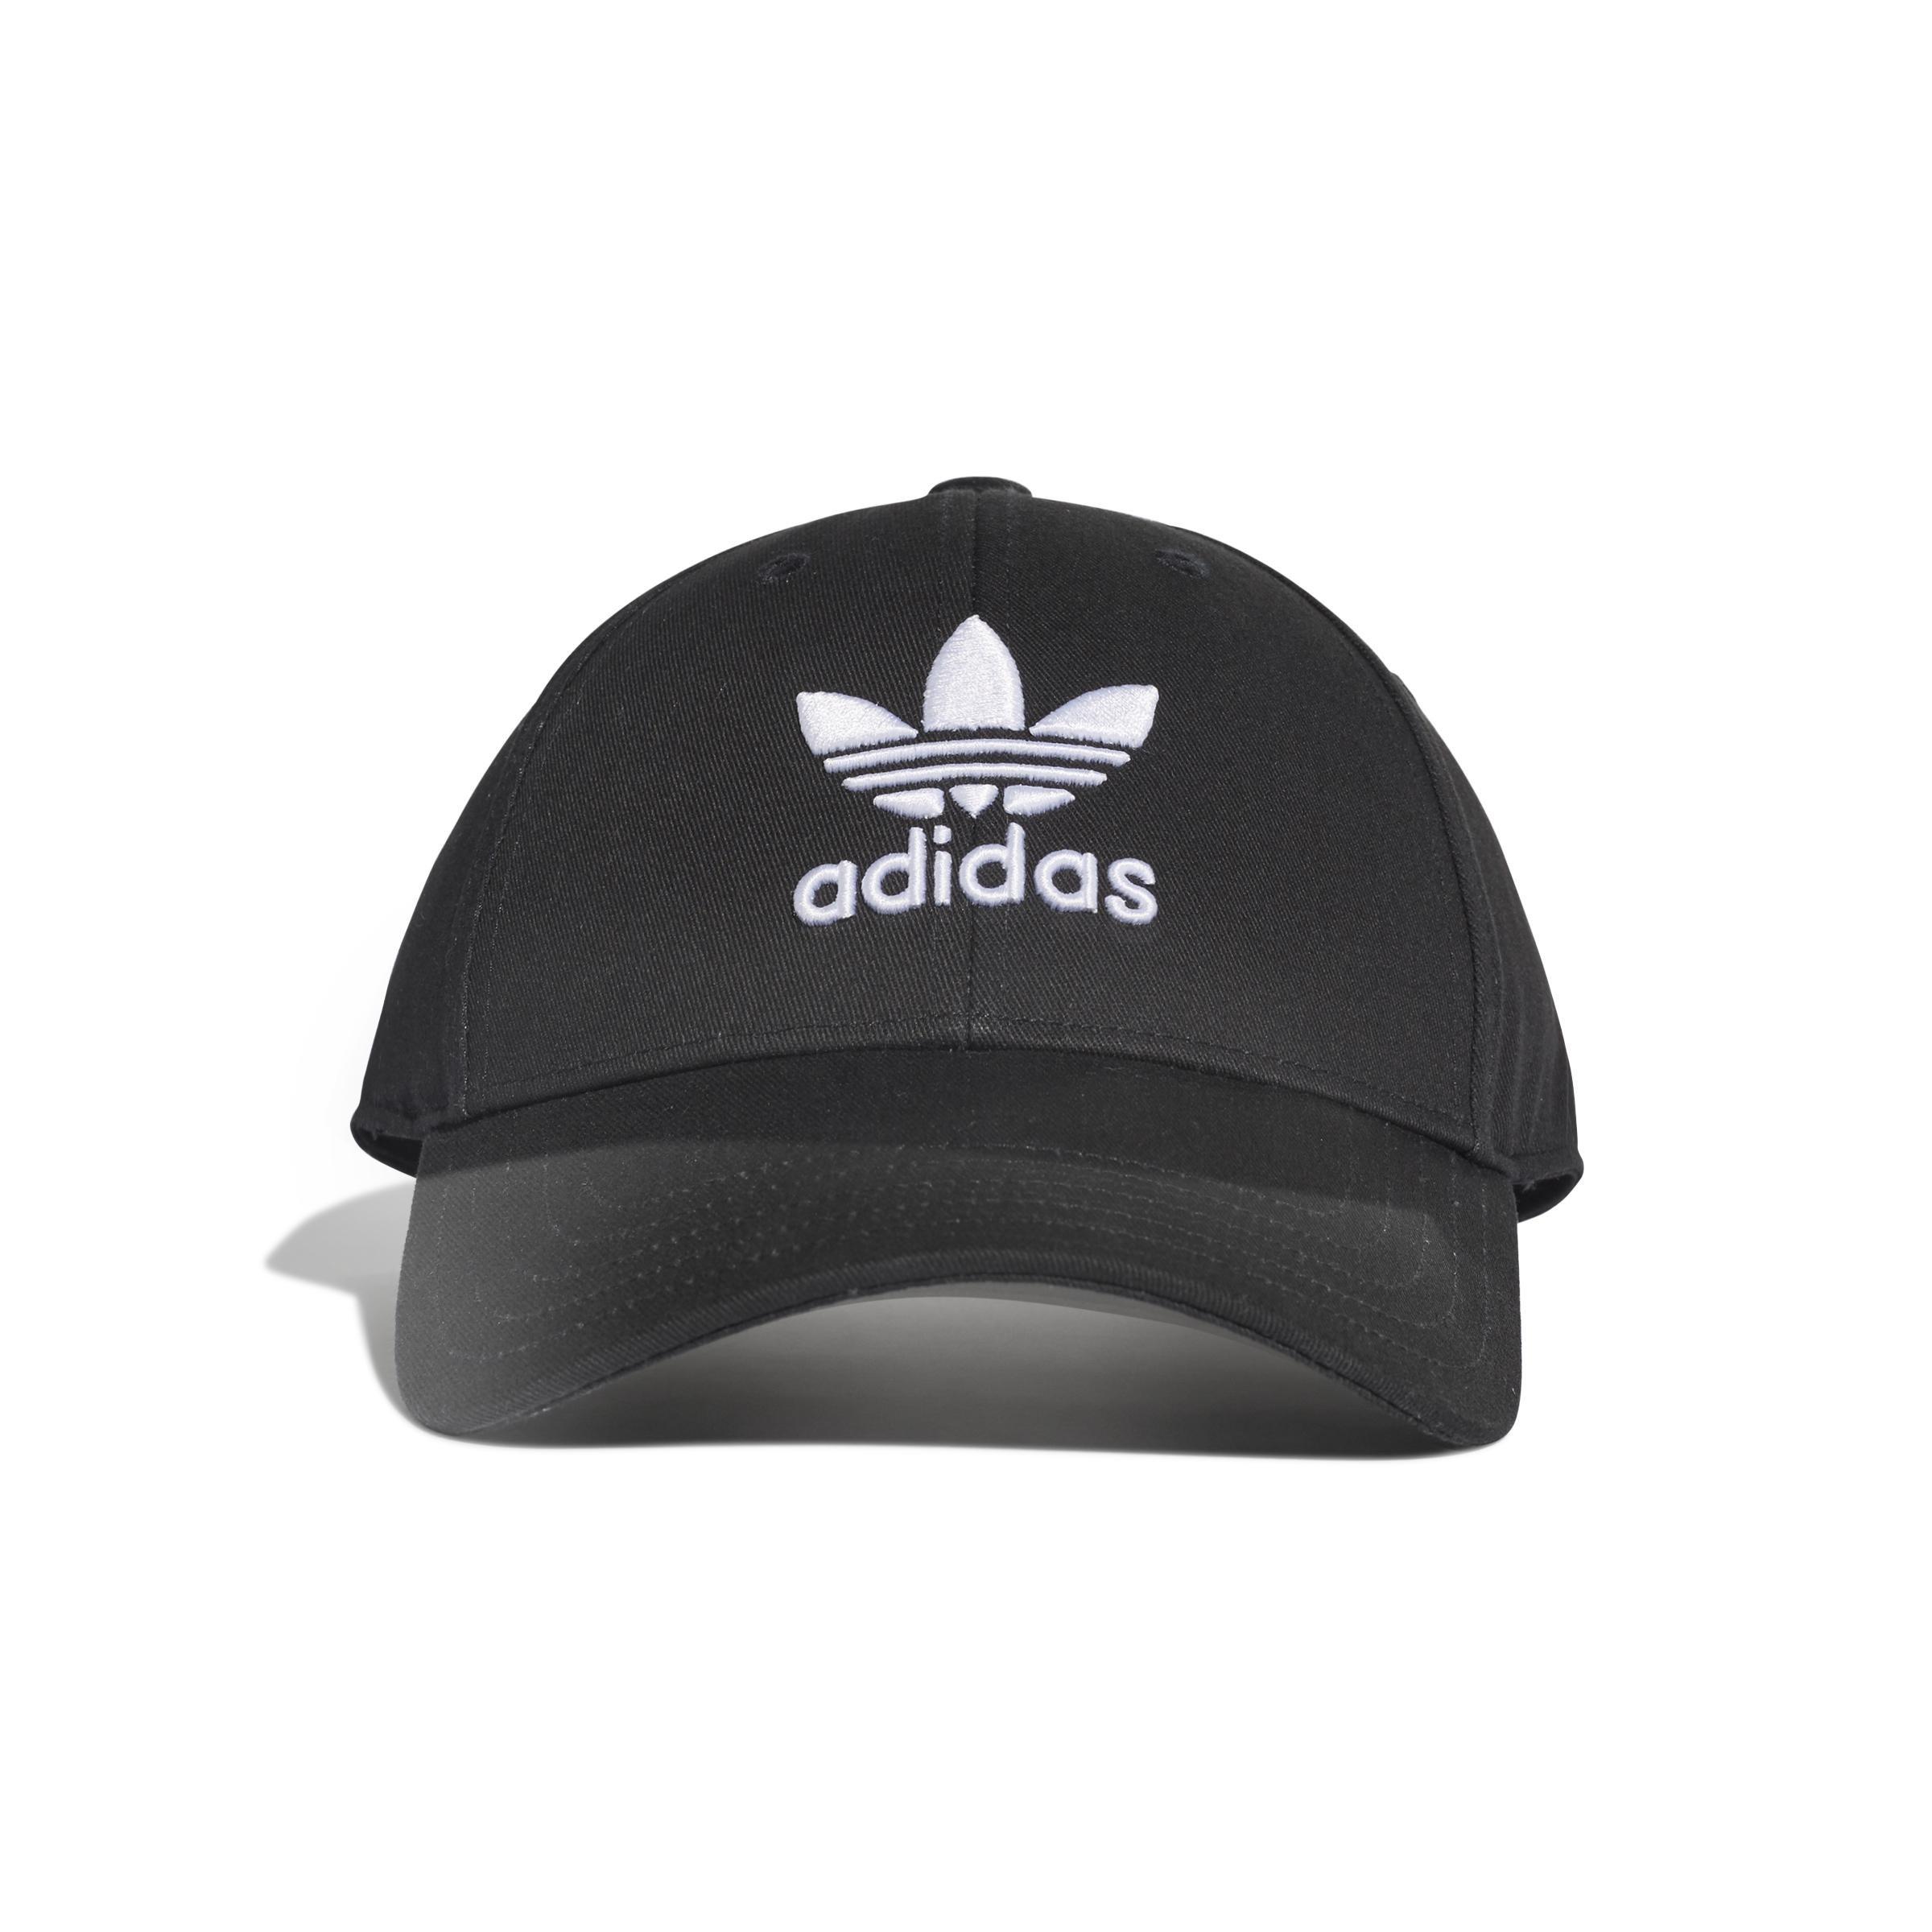 adidas - Unisex Trefoil Baseball Cap, Black